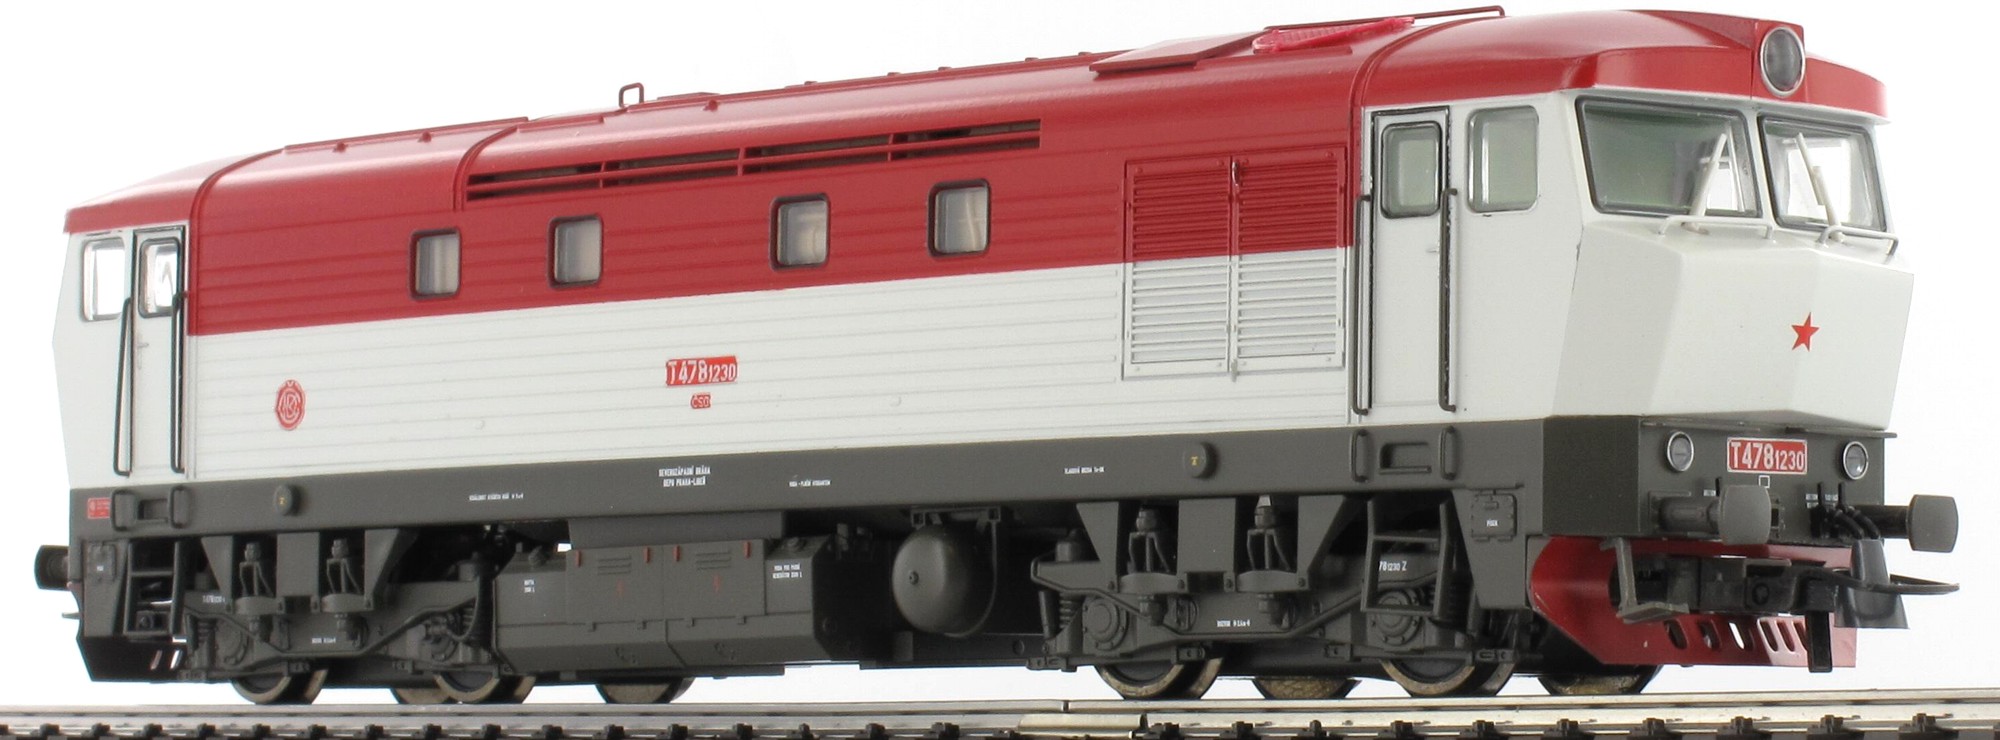 Model dieselové lokomotivy řady T478.1230 ČSD Zvuk